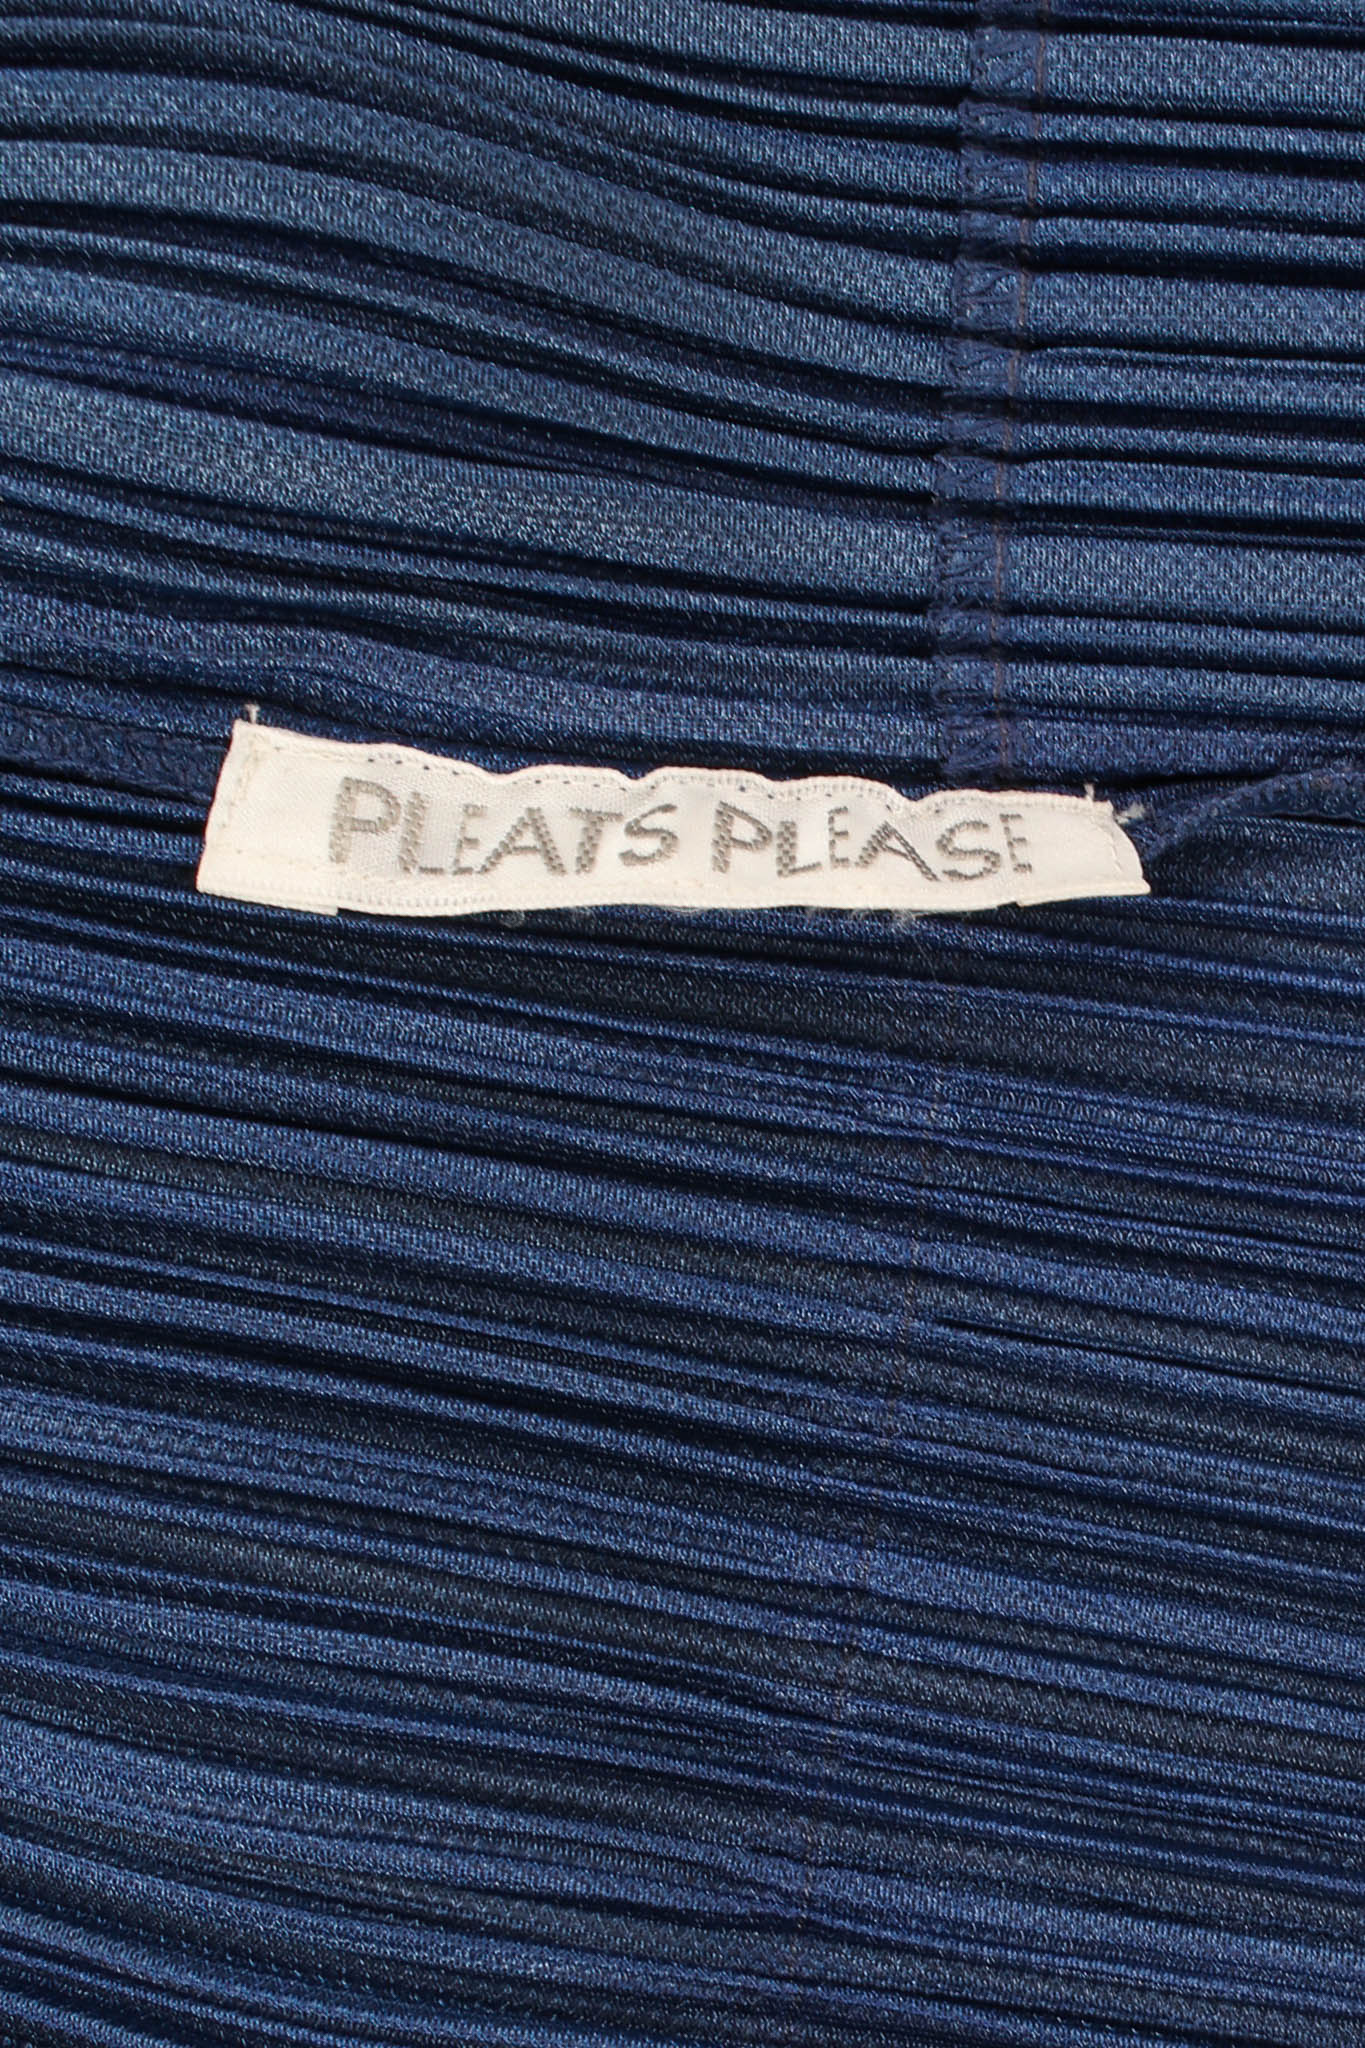 Vintage Pleats Please Issey Miyake Pleated Top label @ Recess LA